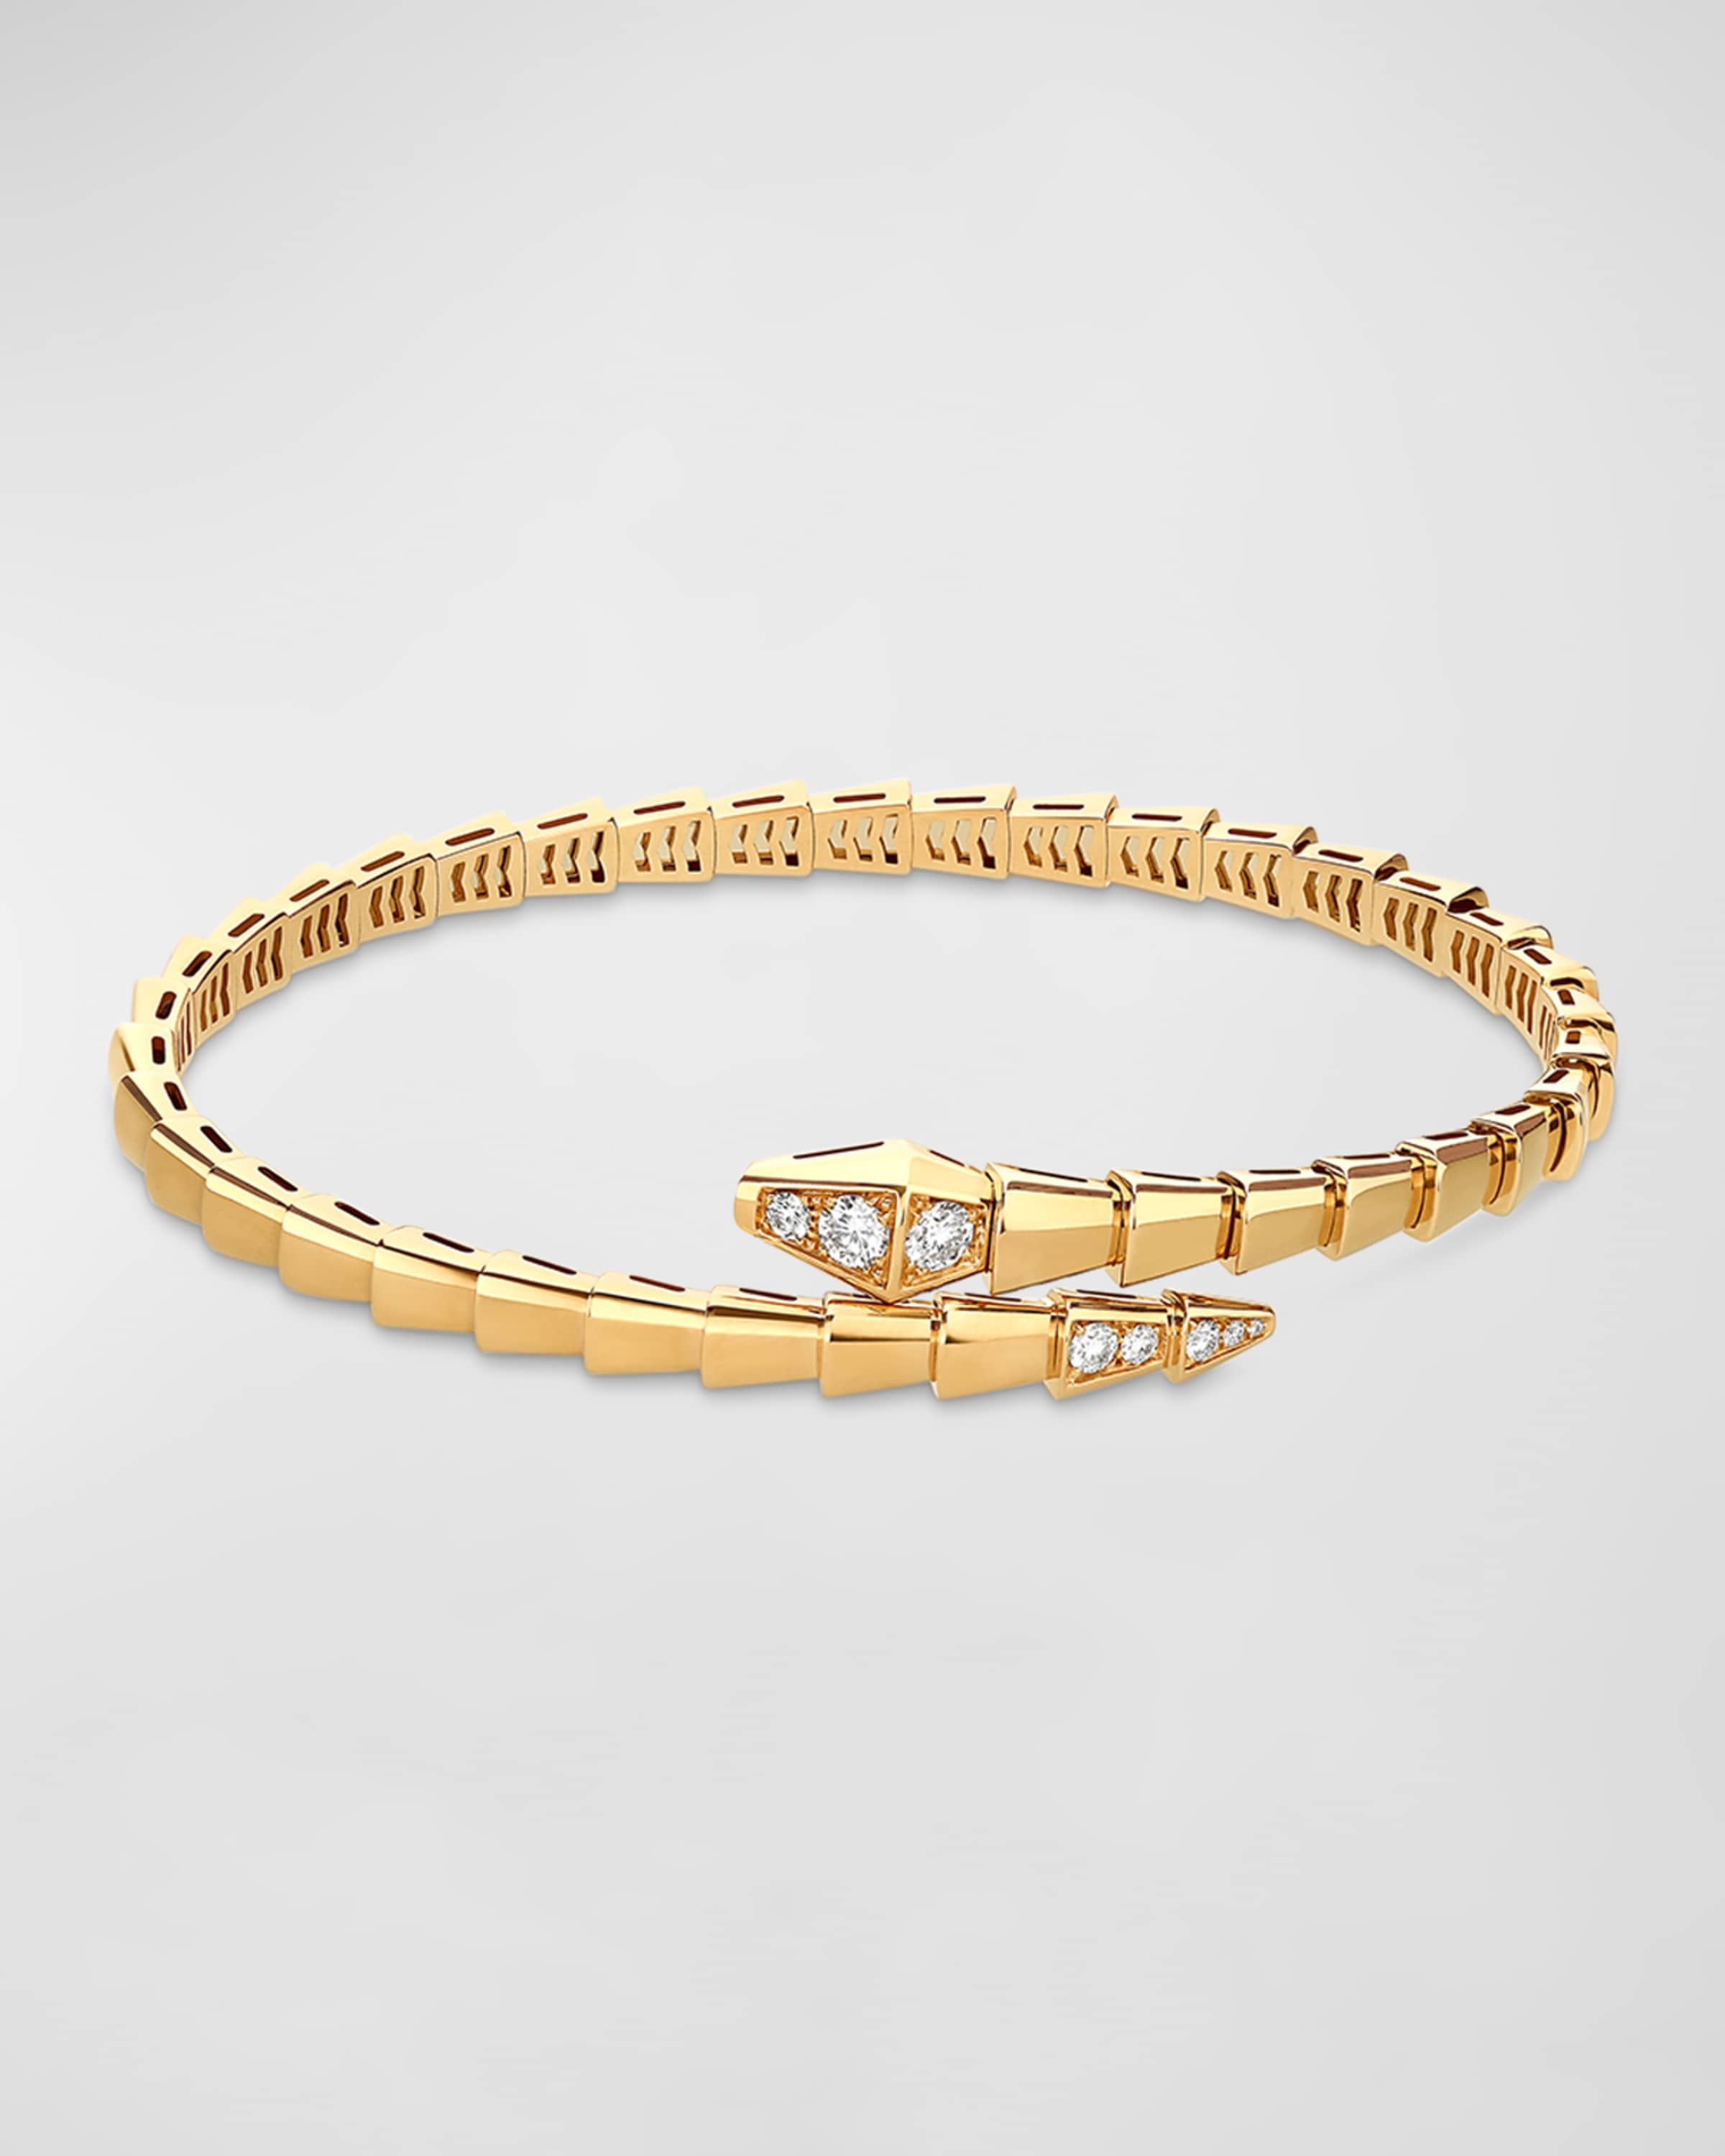 Serpenti Viper 18K Yellow Gold Bracelet with Diamonds, Size L - 4